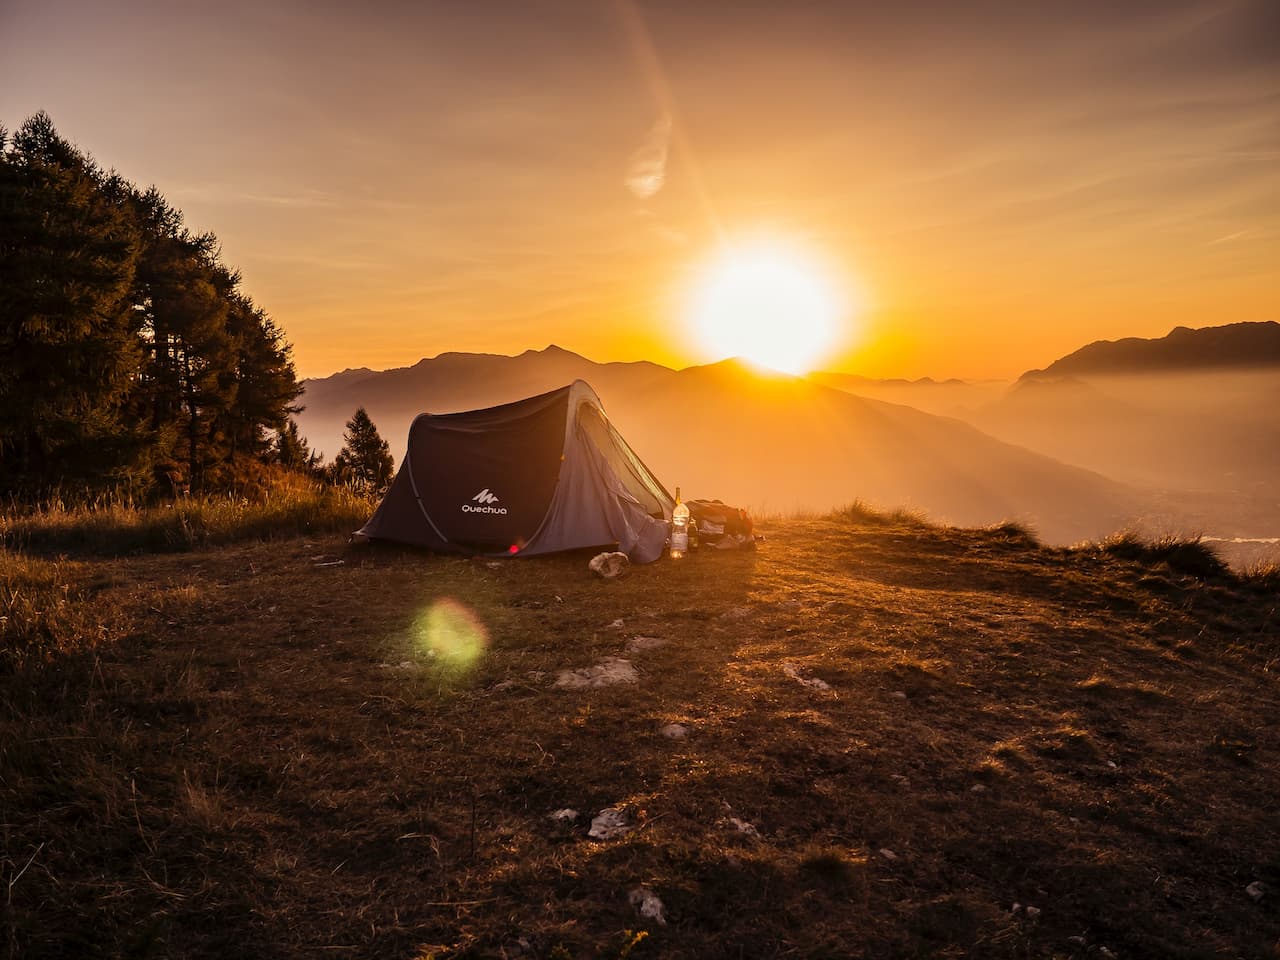 Camping during sunset